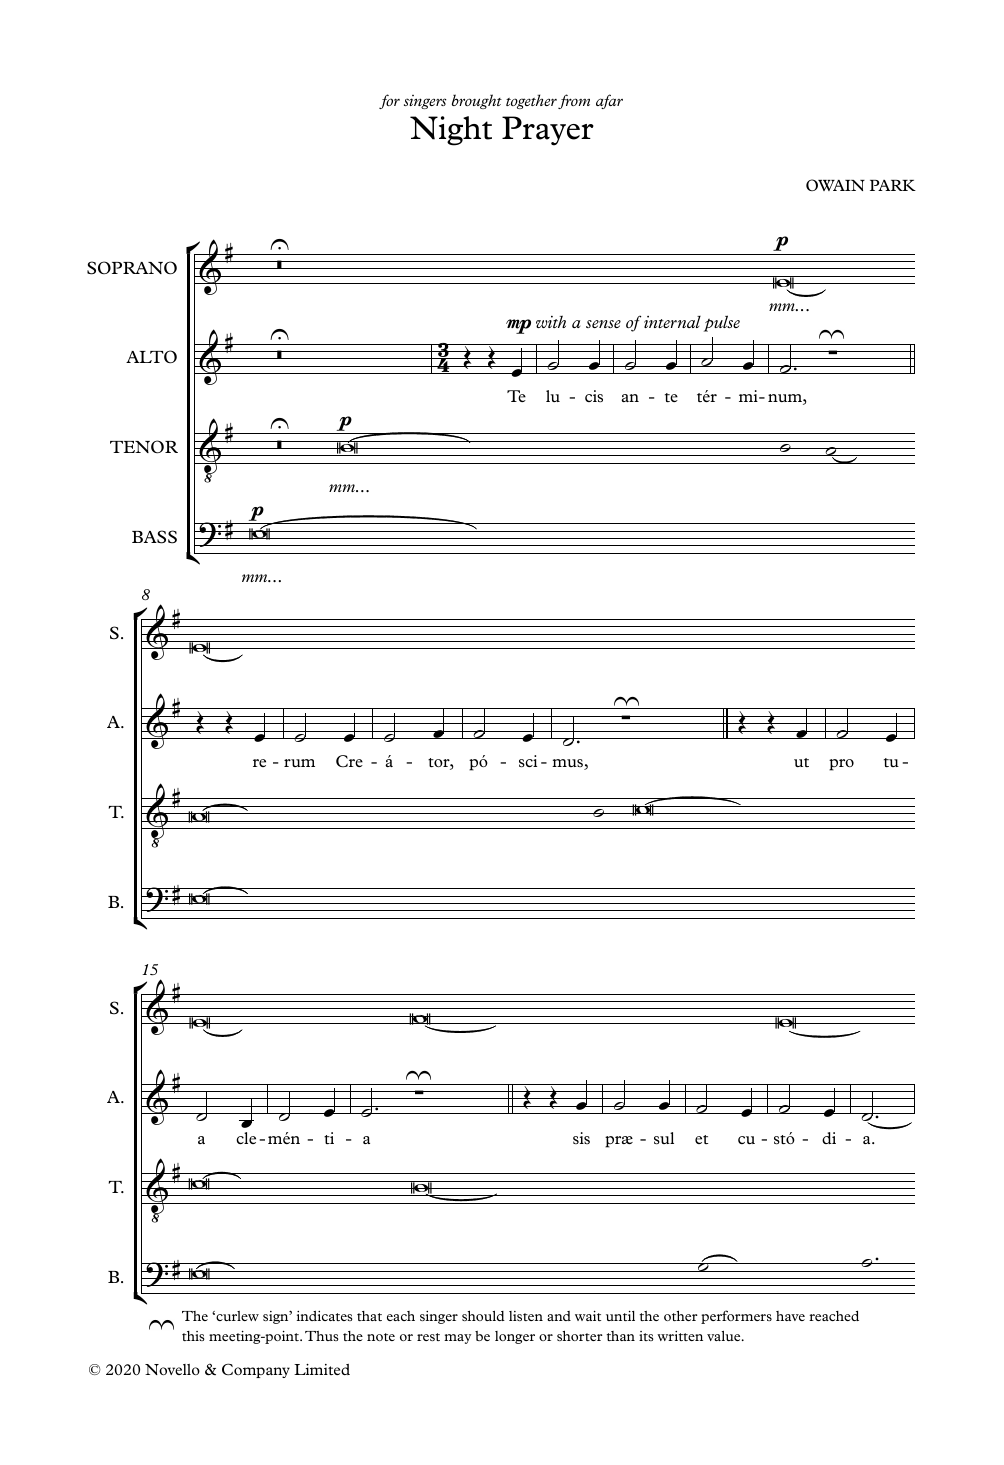 Owain Park Night Prayer sheet music notes and chords arranged for SATB Choir